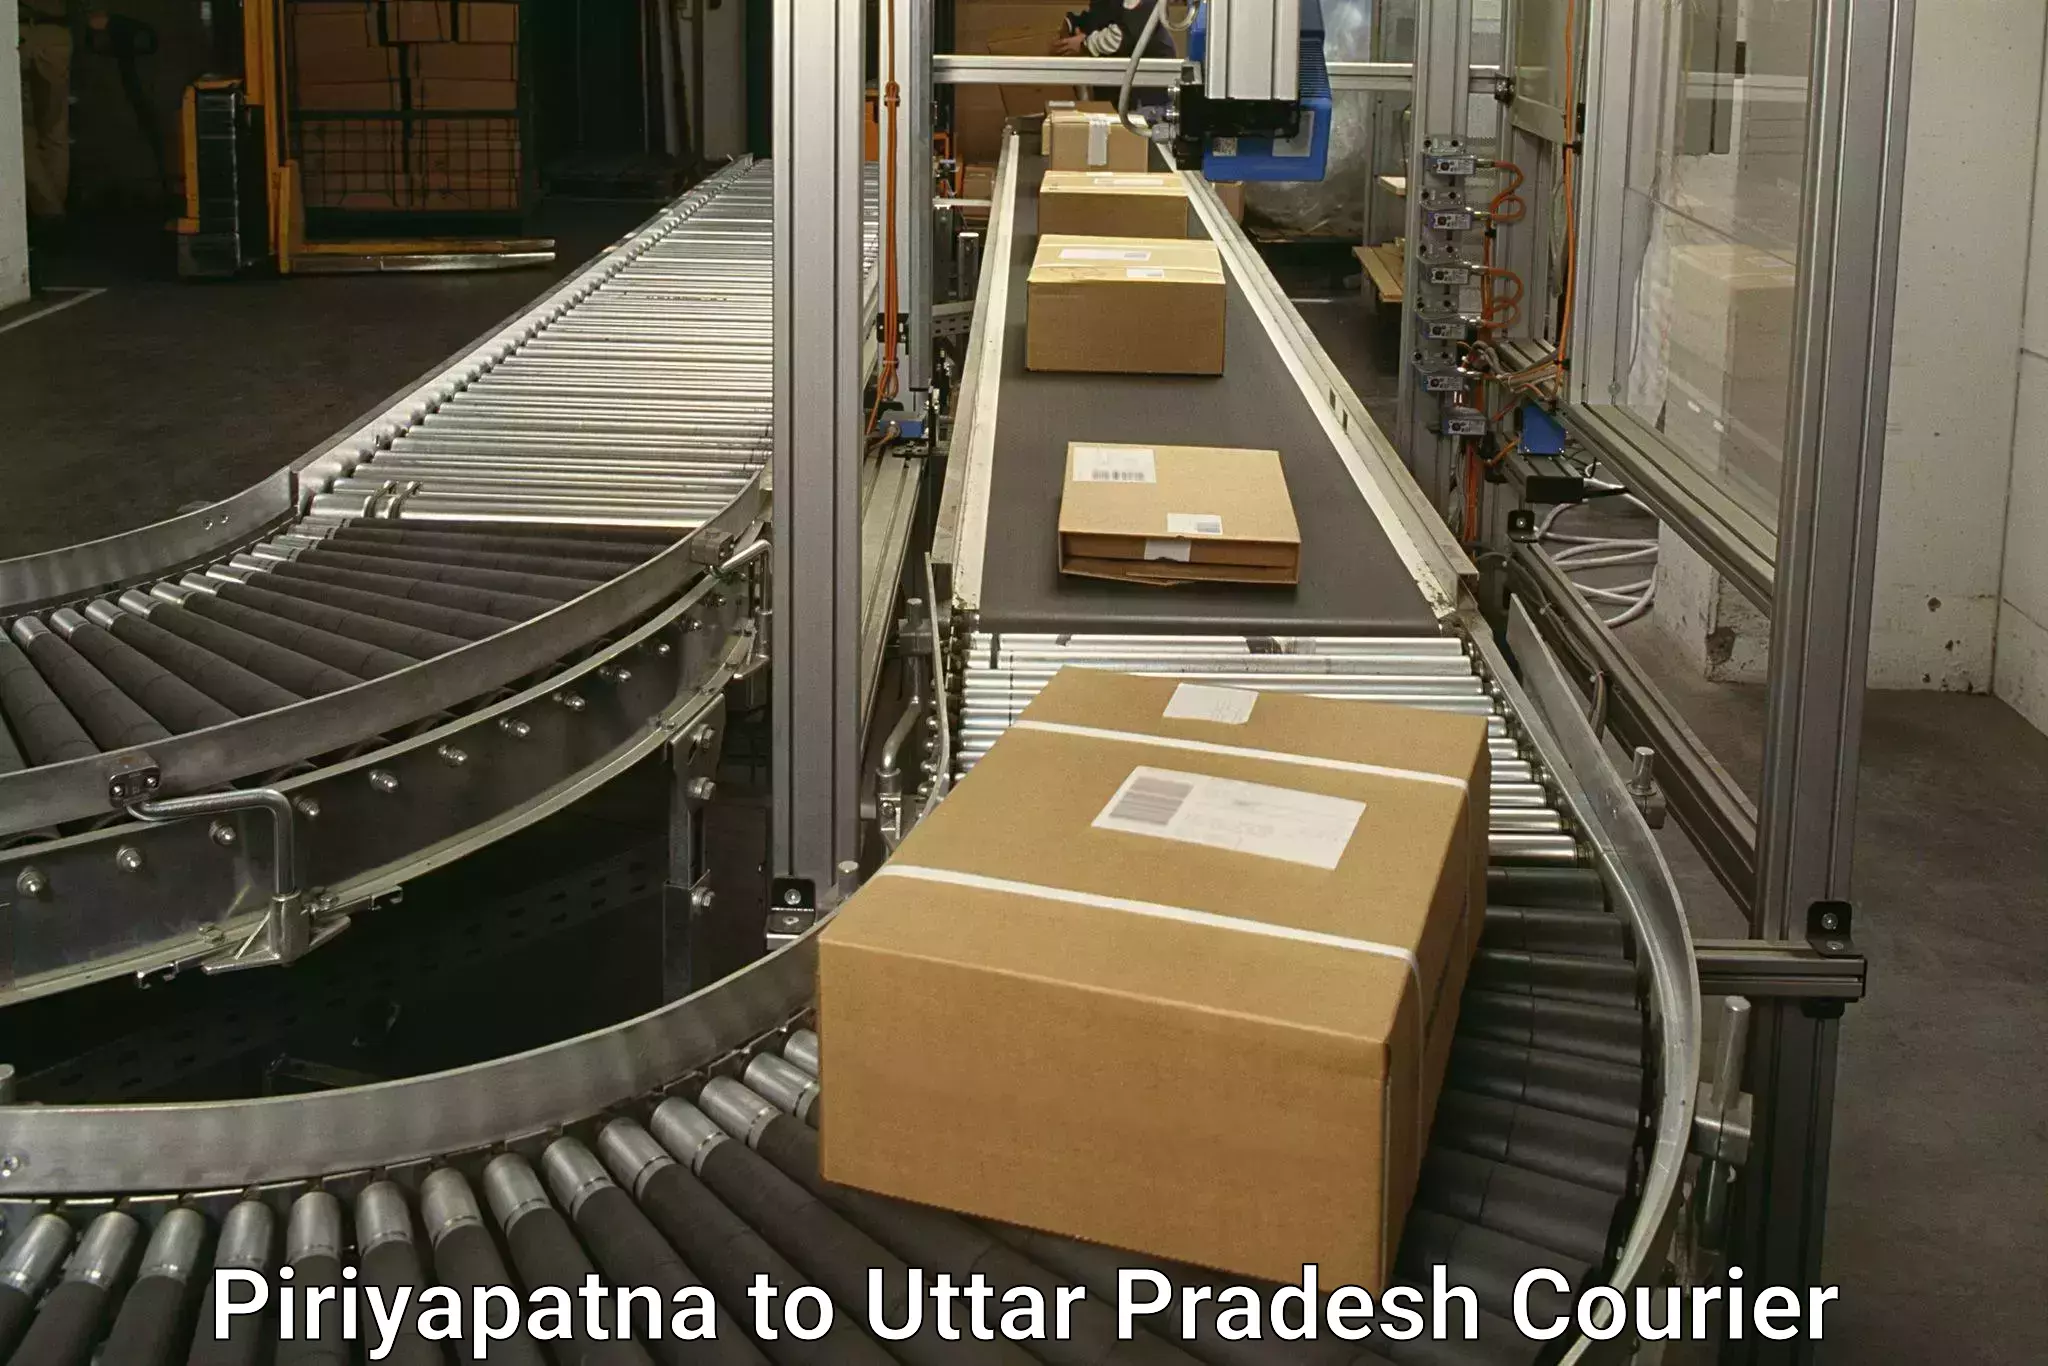 Courier service innovation in Piriyapatna to Gorakhpur